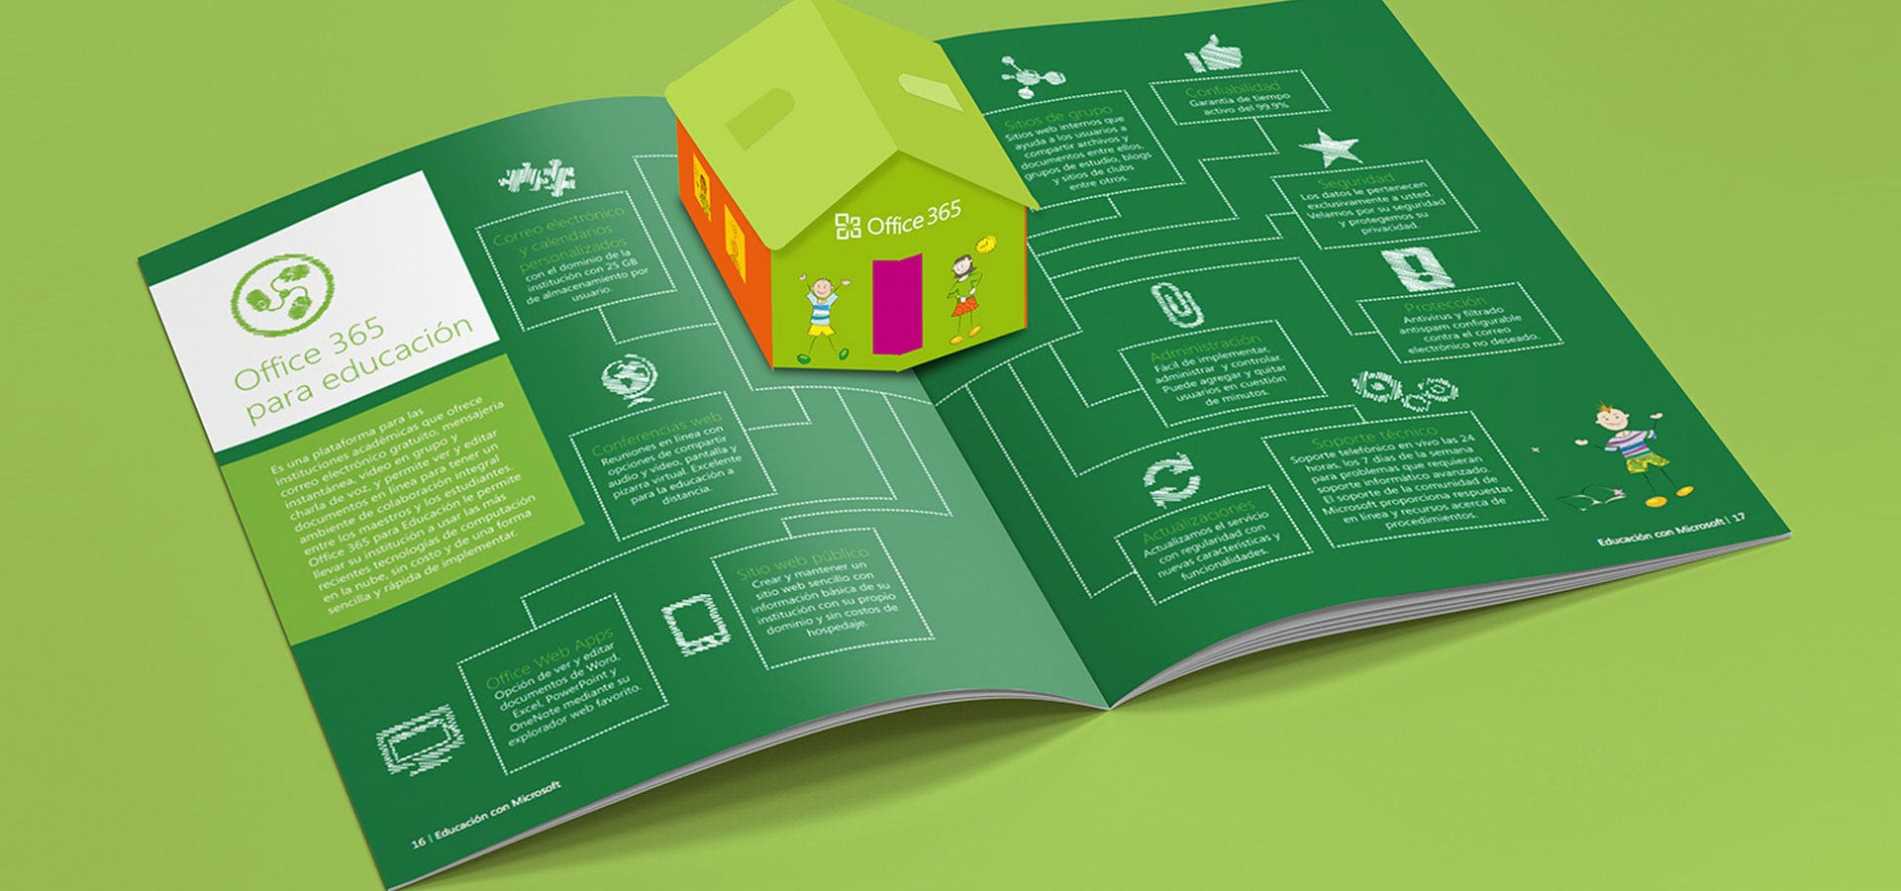 19+ 3D Pop-Up Brochure Designs | Free &amp; Premium Templates in Pop Up Brochure Template